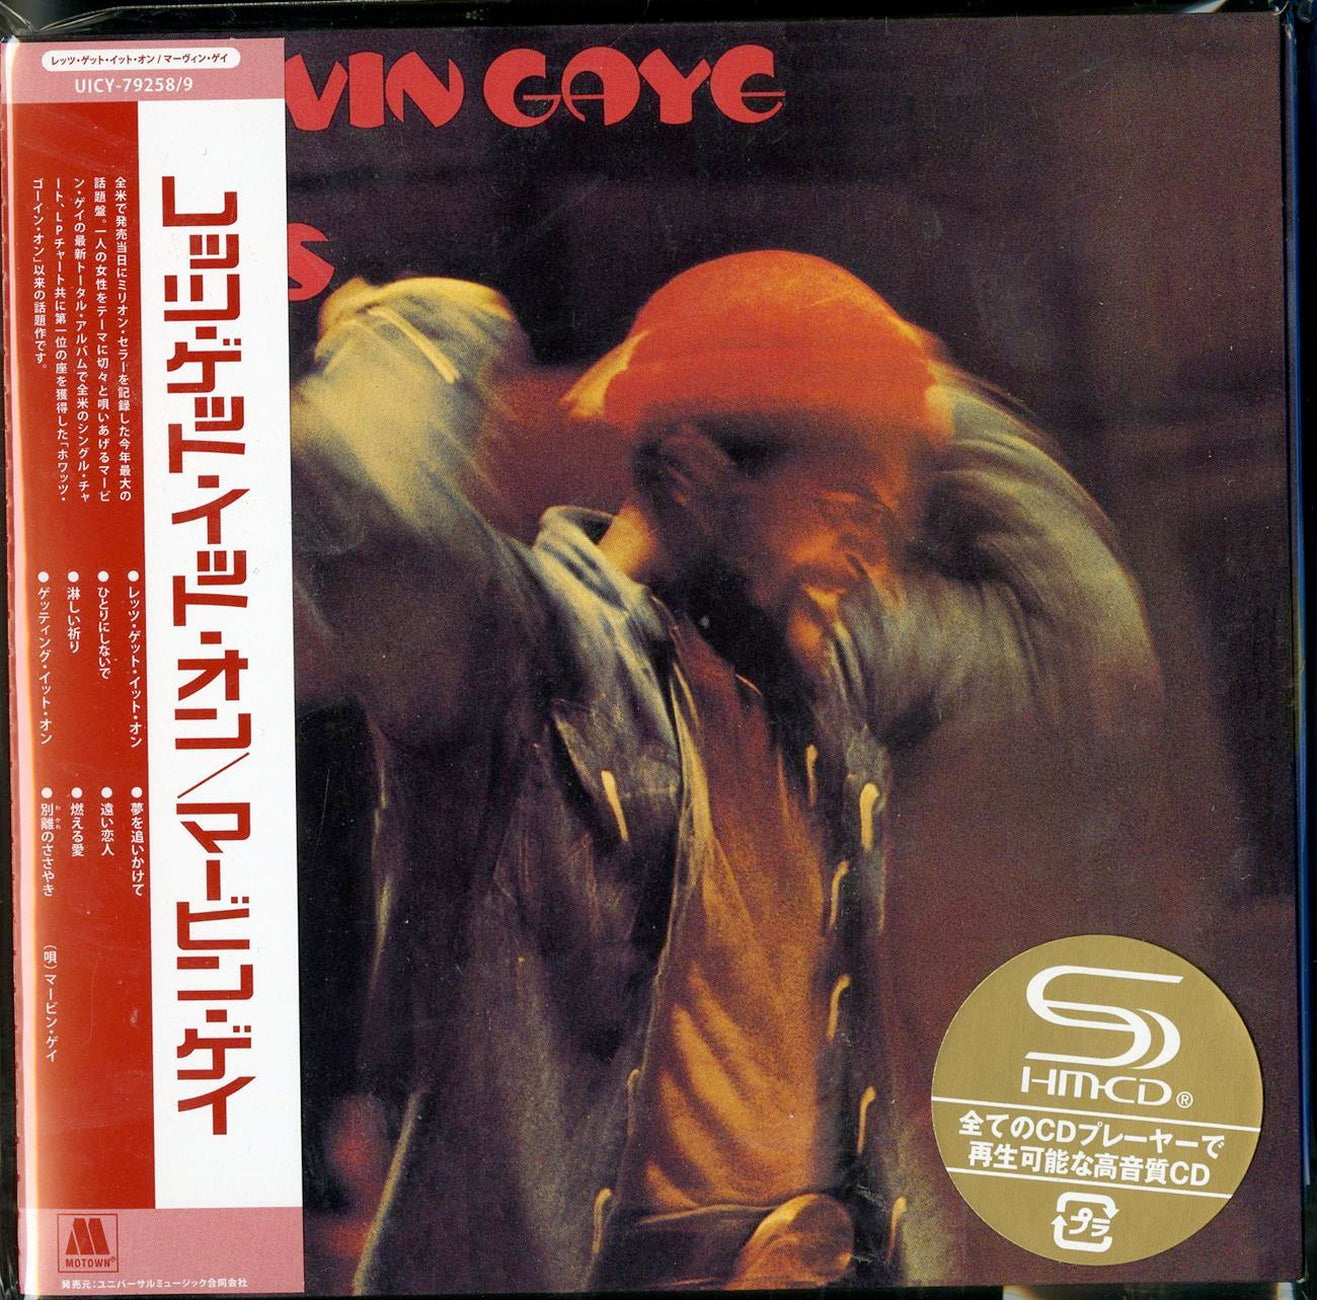 Marvin Gaye - Let'S Get It On - Japan 2 Mini LP SHM-CD Bonus Track Lim –  CDs Vinyl Japan Store CD, Marvin Gaye, Mini LP CD, Motown, R&B & Soul,  SHM-CD